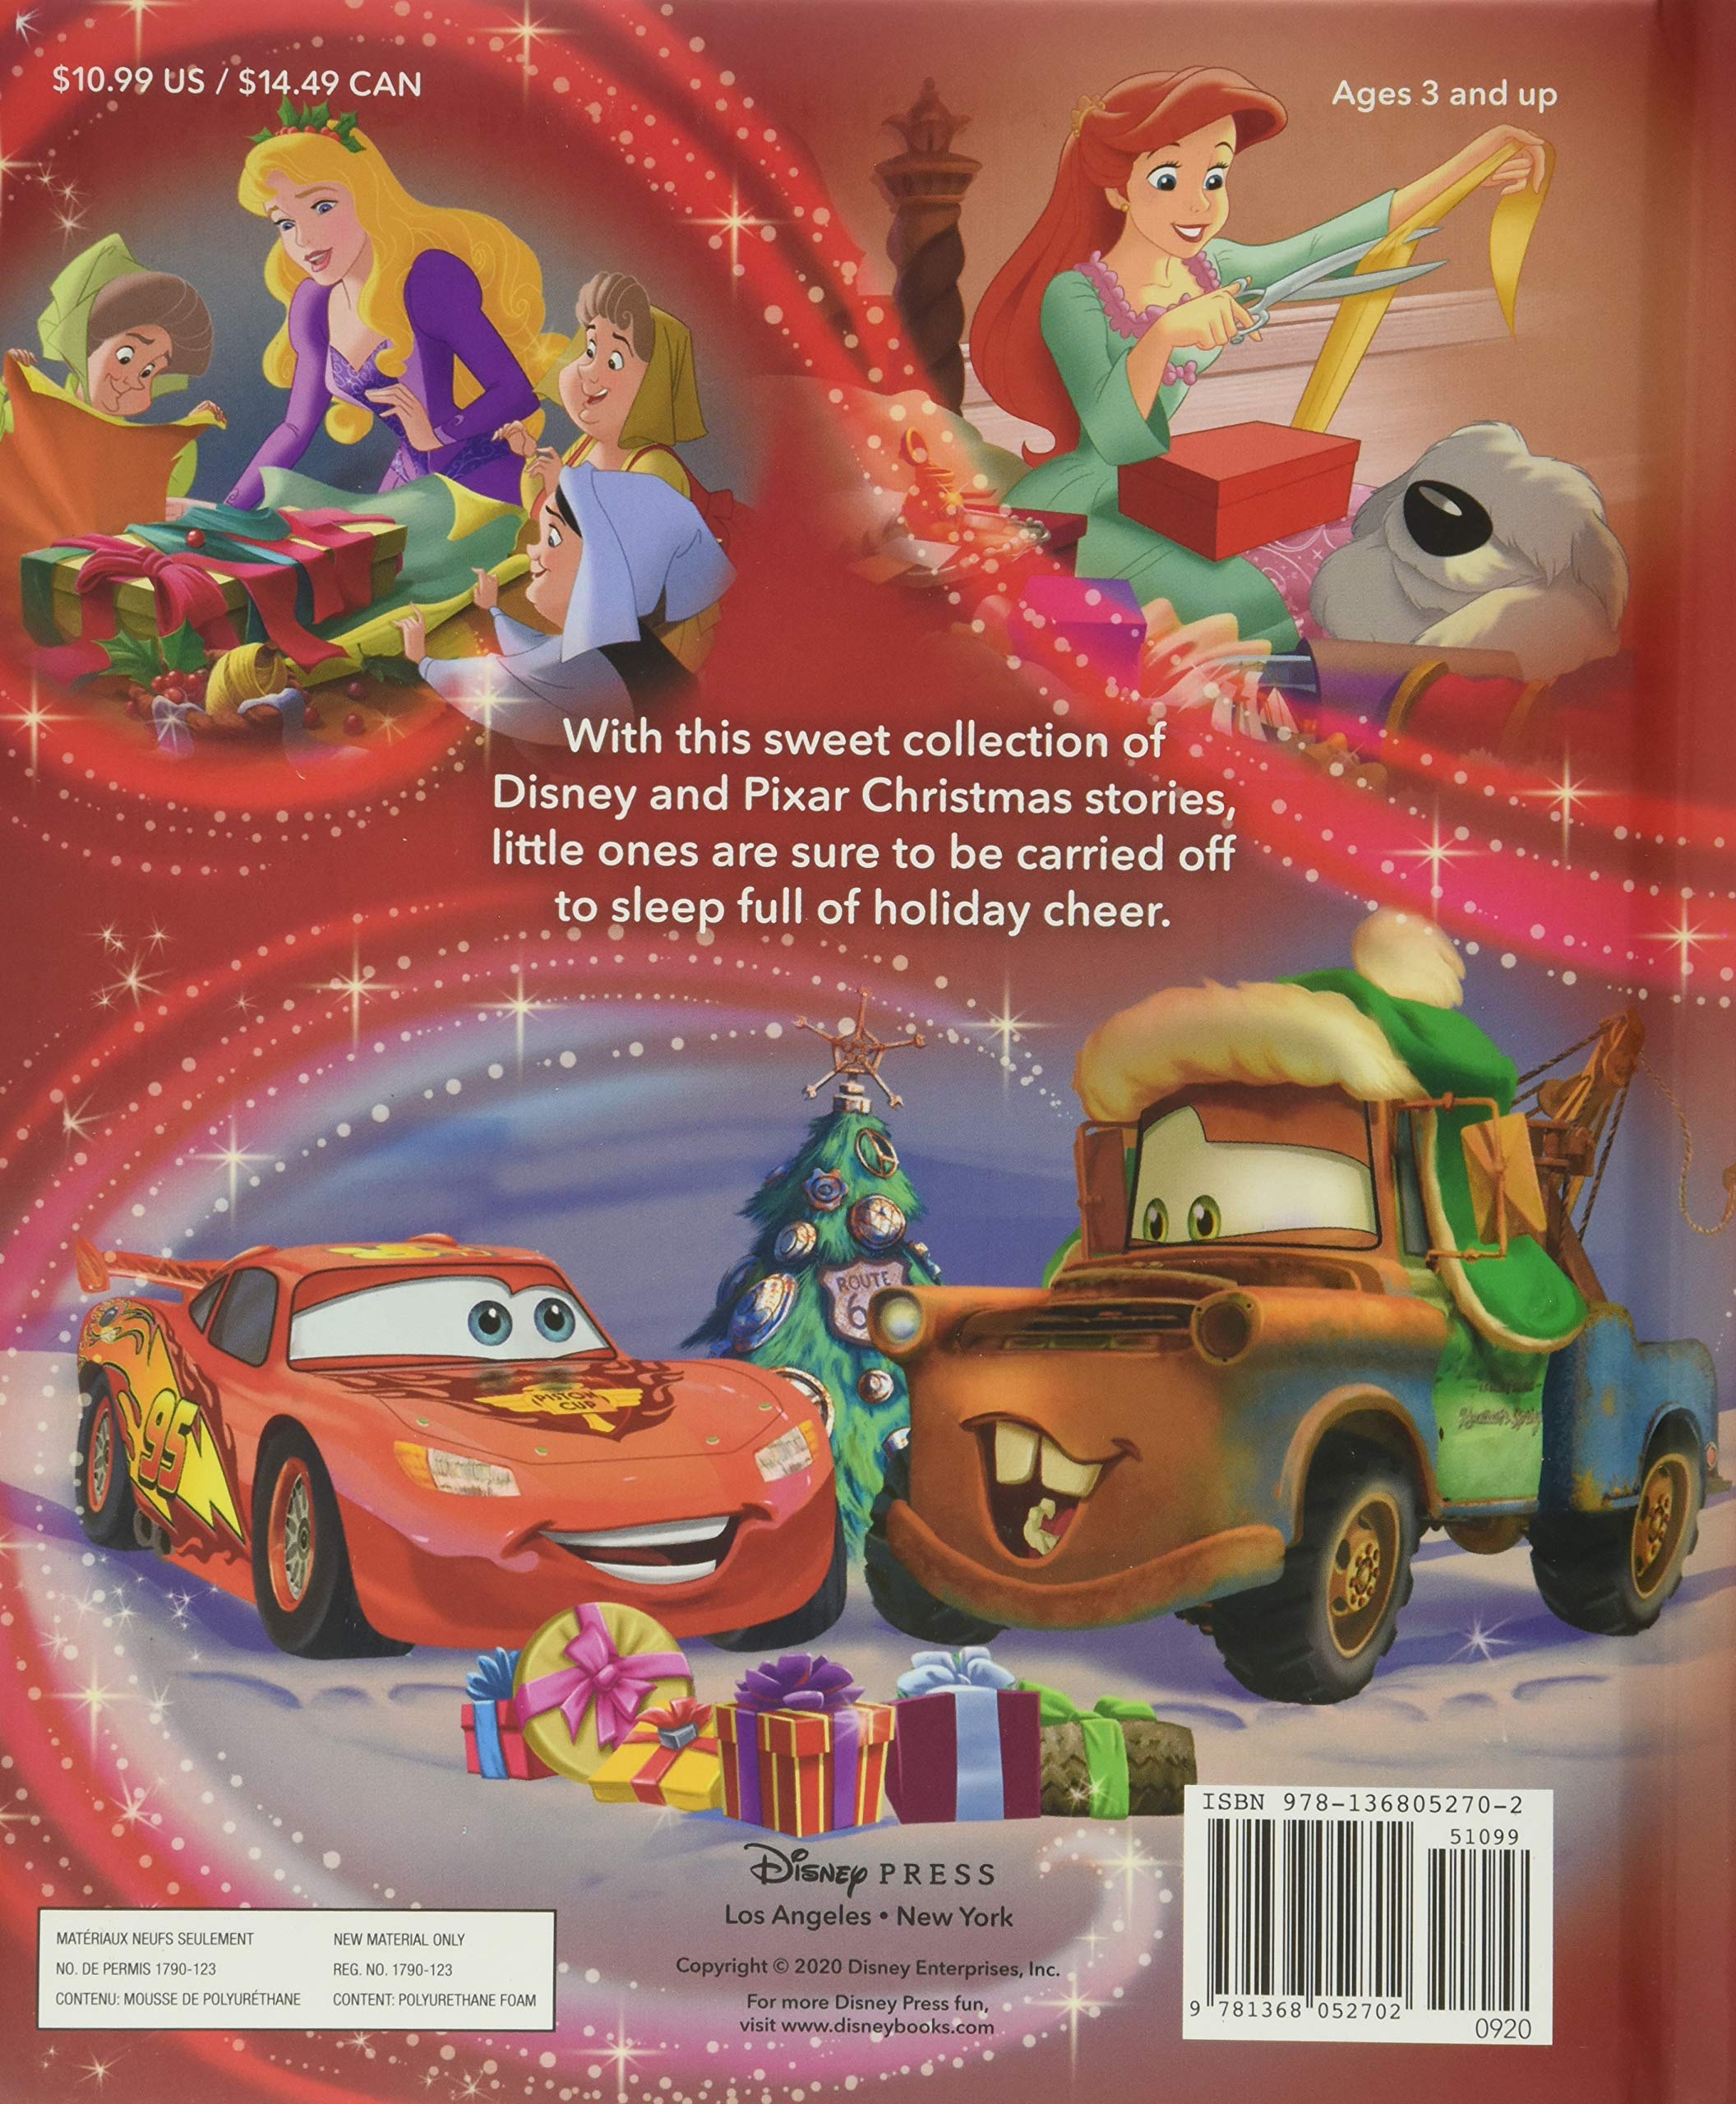 My First Disney Christmas Bedtime Storybook | Disney Books